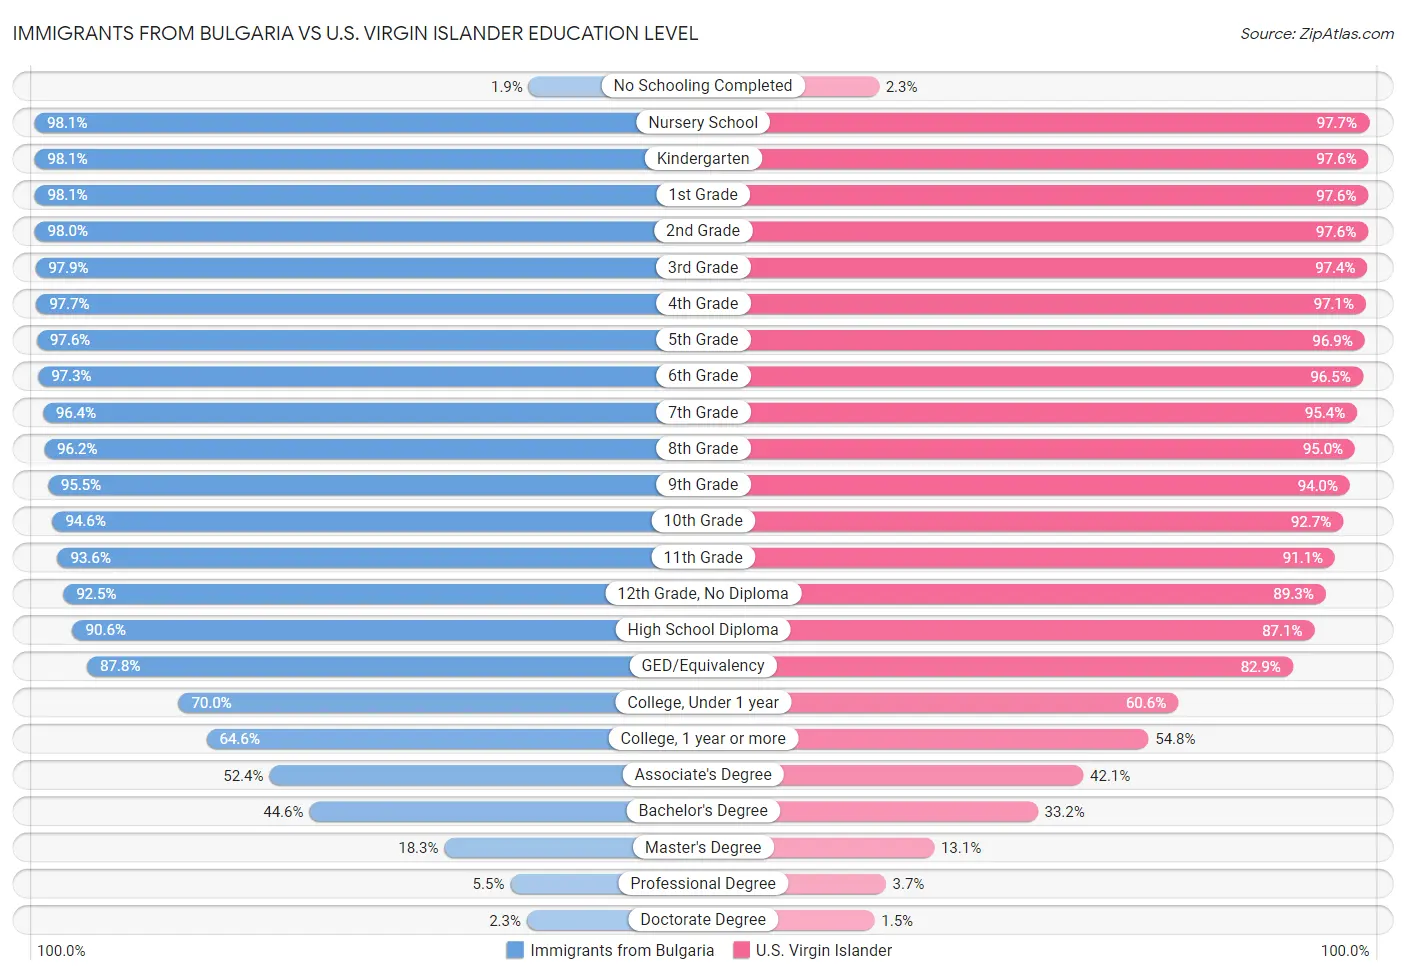 Immigrants from Bulgaria vs U.S. Virgin Islander Education Level